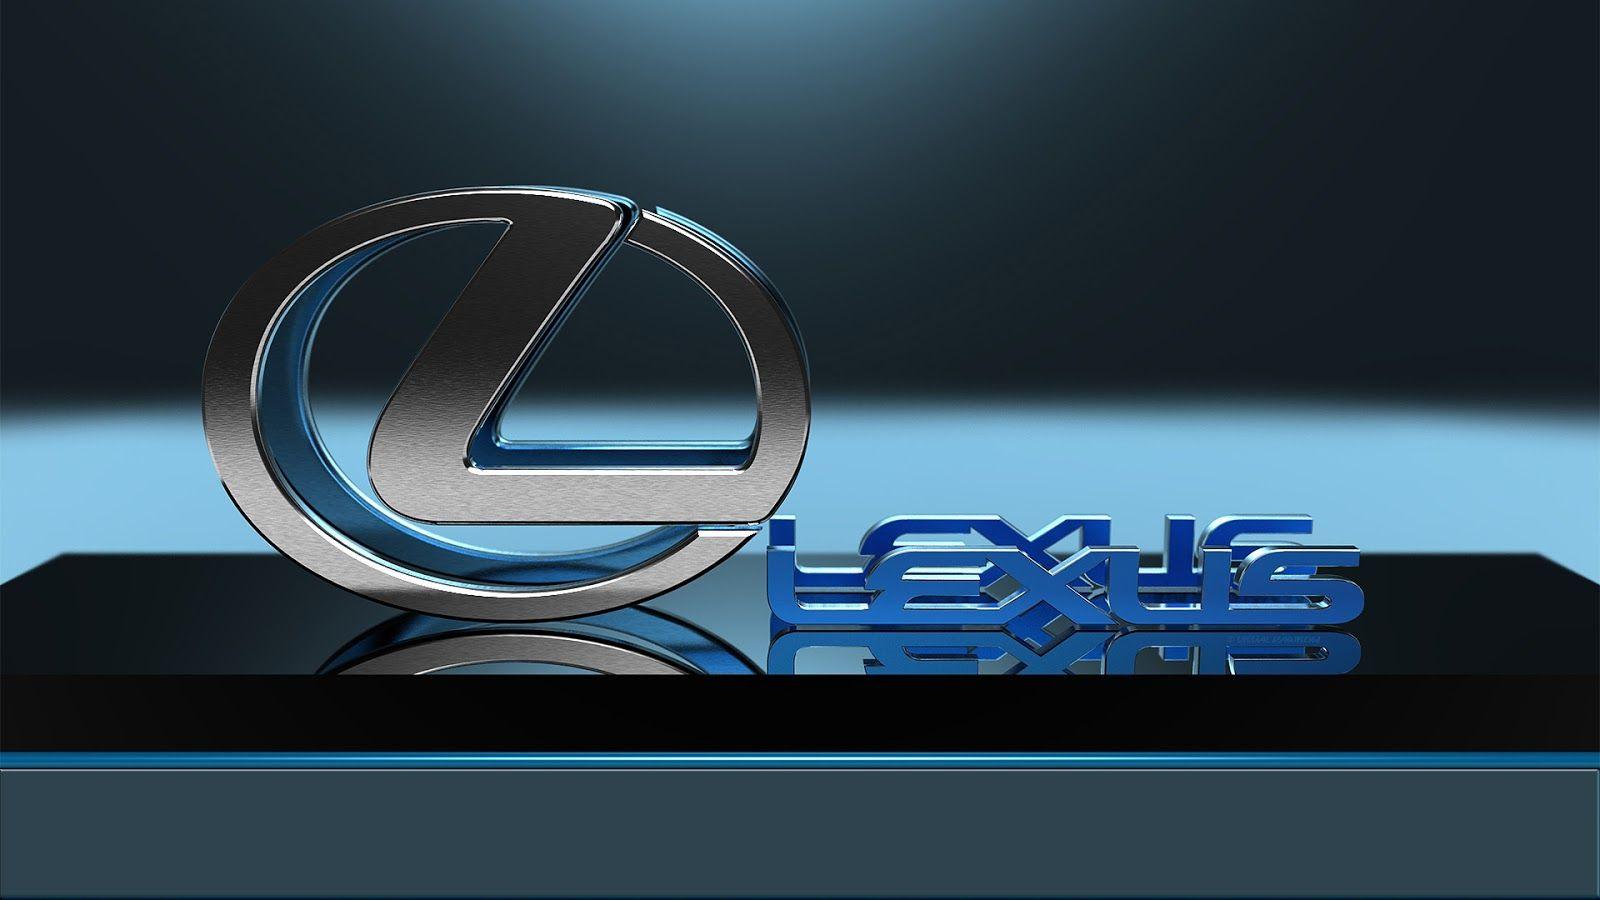 Cool Car Company Logo - Lexus Logo, Lexus Car Symbol Meaning and History | Car Brand Names.com